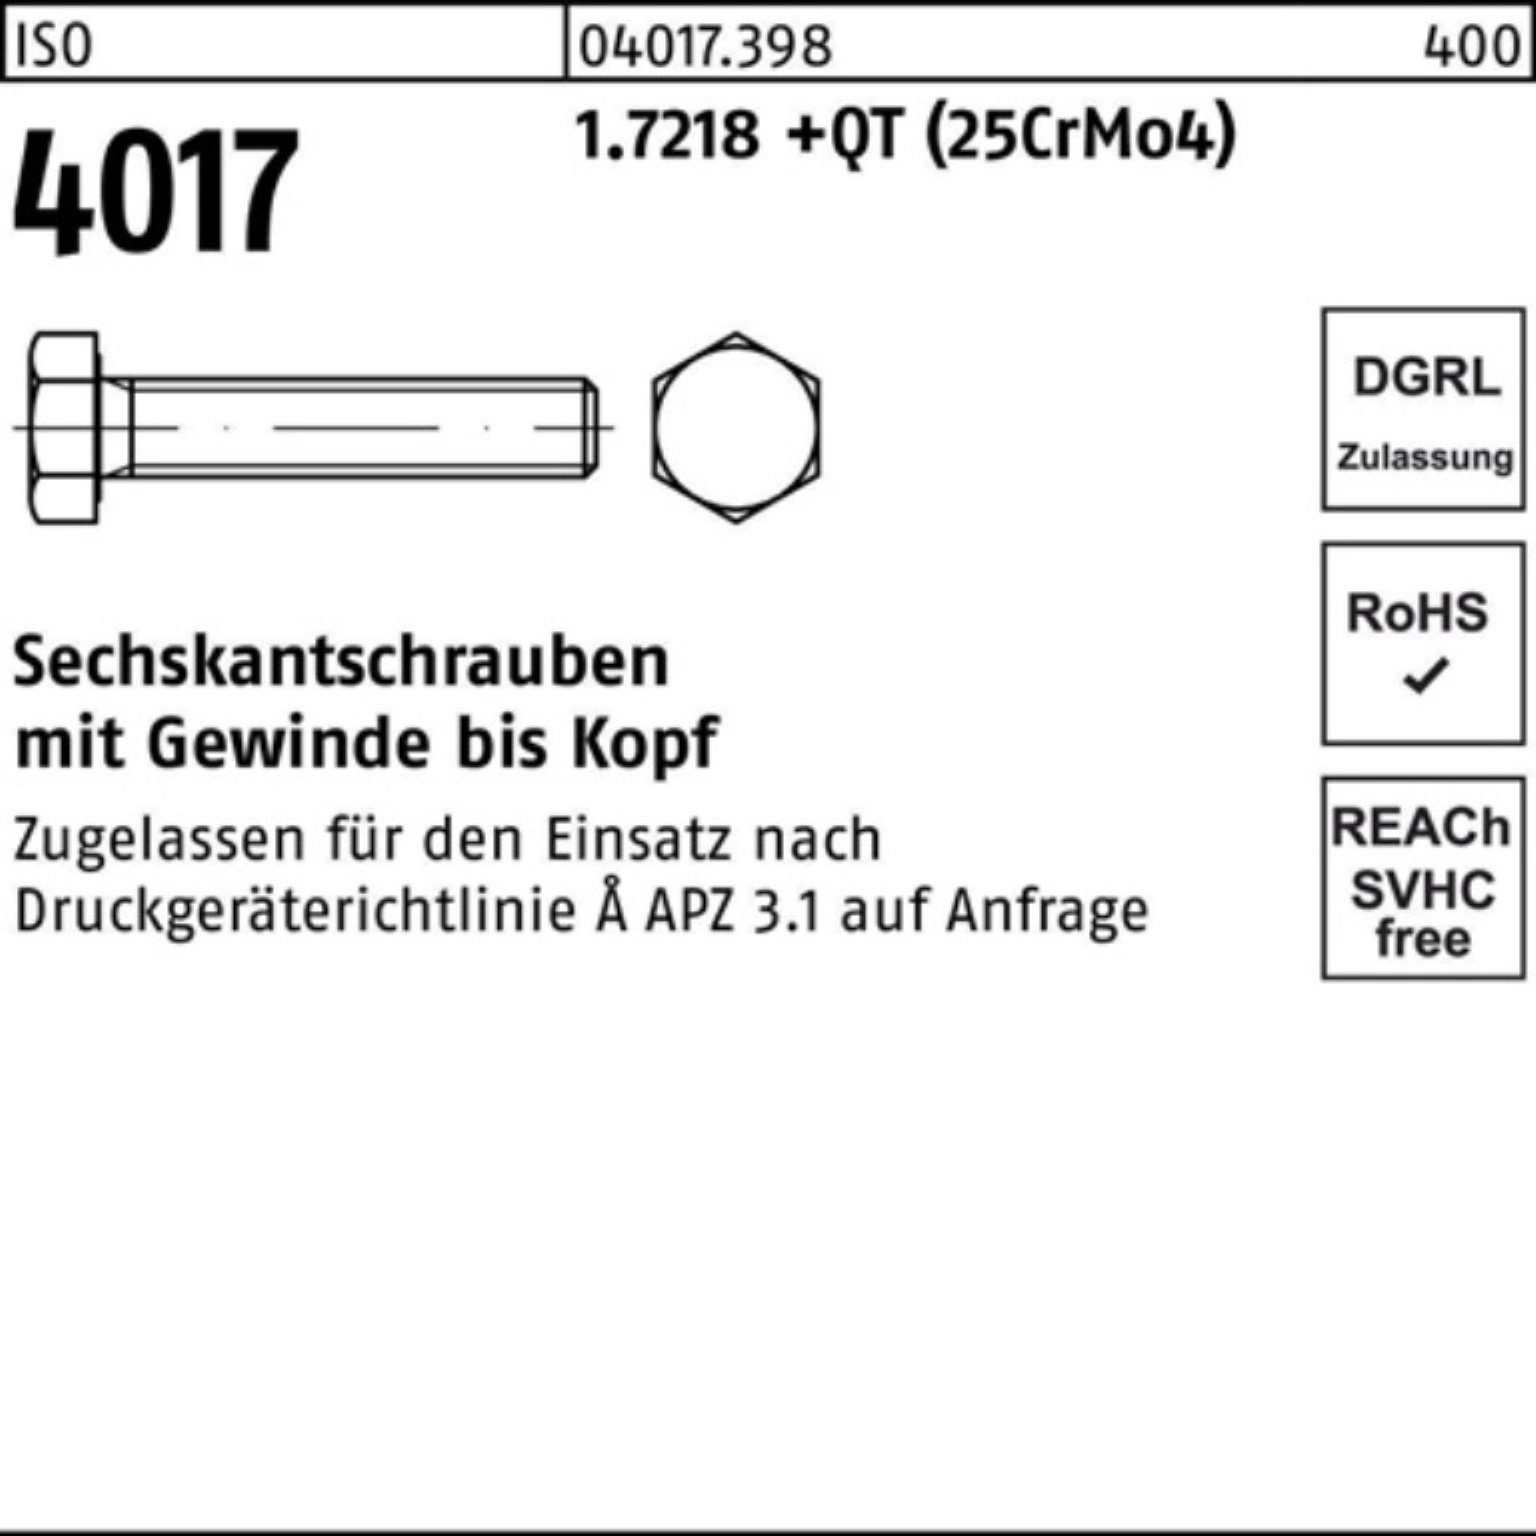 1.7218 Bufab 45 VG ISO +QT 100er 4017 M20x (25CrMo4) Sechskantschraube Sechskantschraube Pack